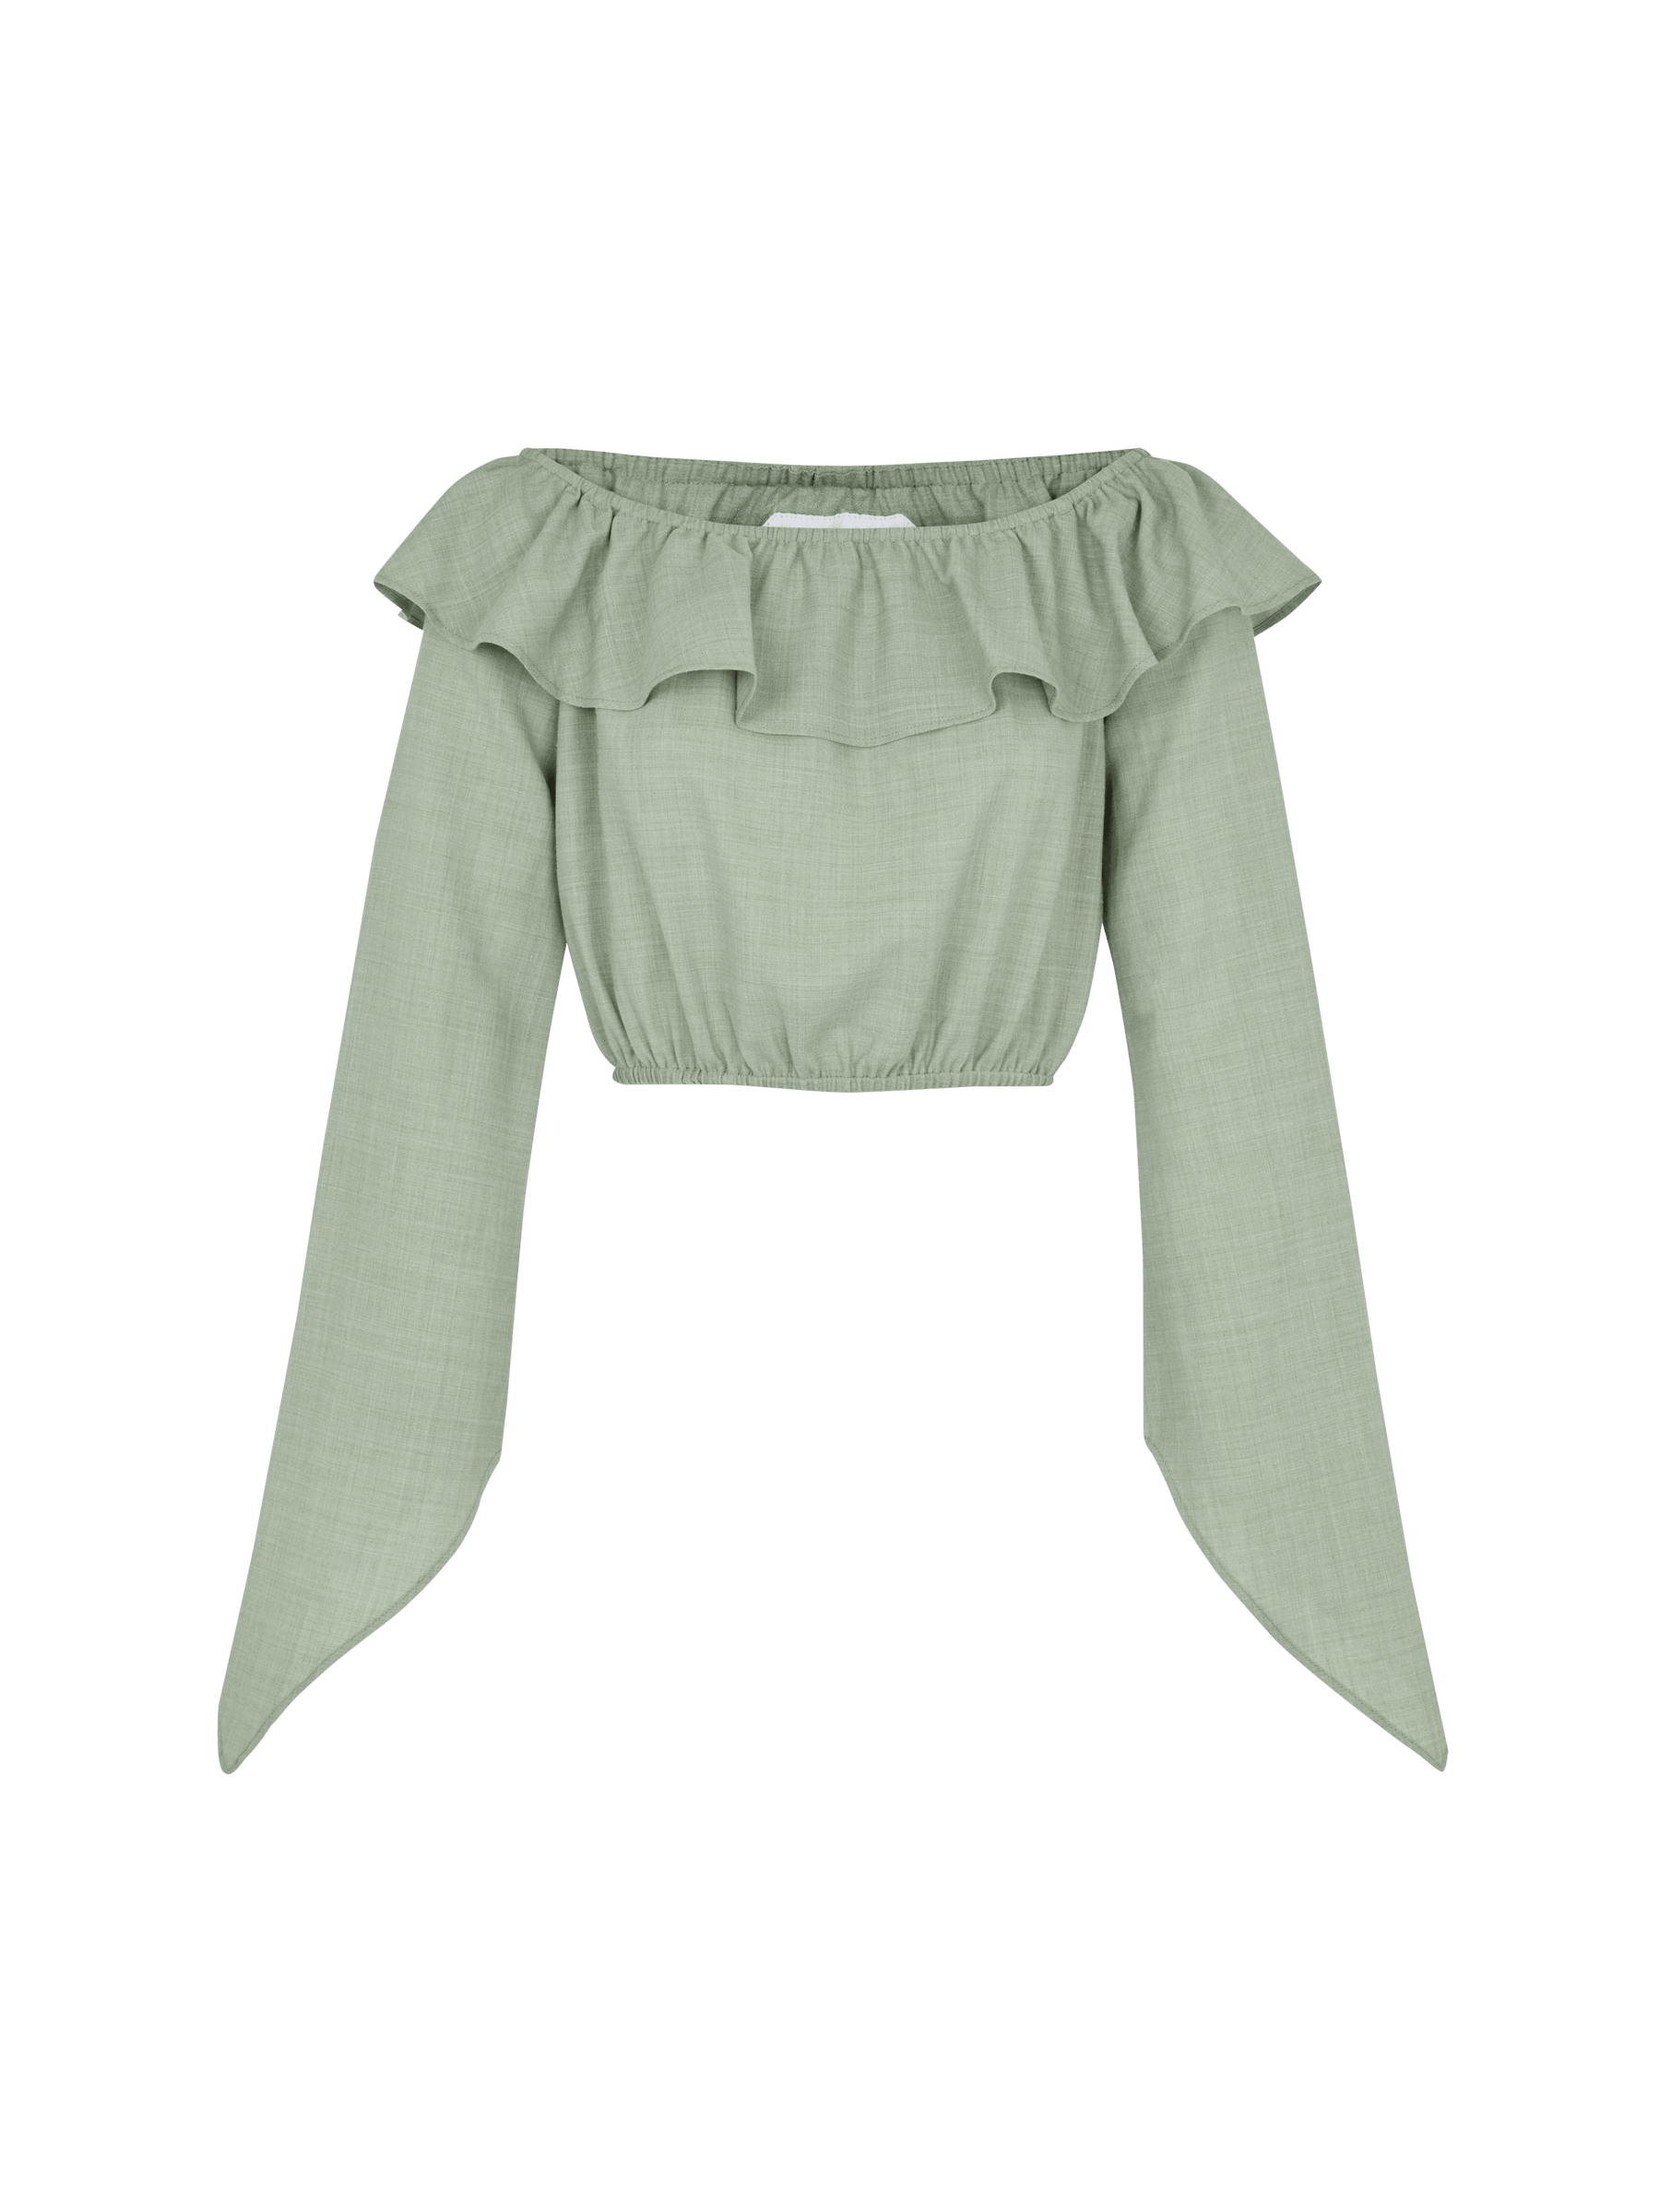 CECILE - Blouse crop top Bardot neckline ruffled fabric Cotton Oeko-Tex celadon green Blouse Fête Impériale